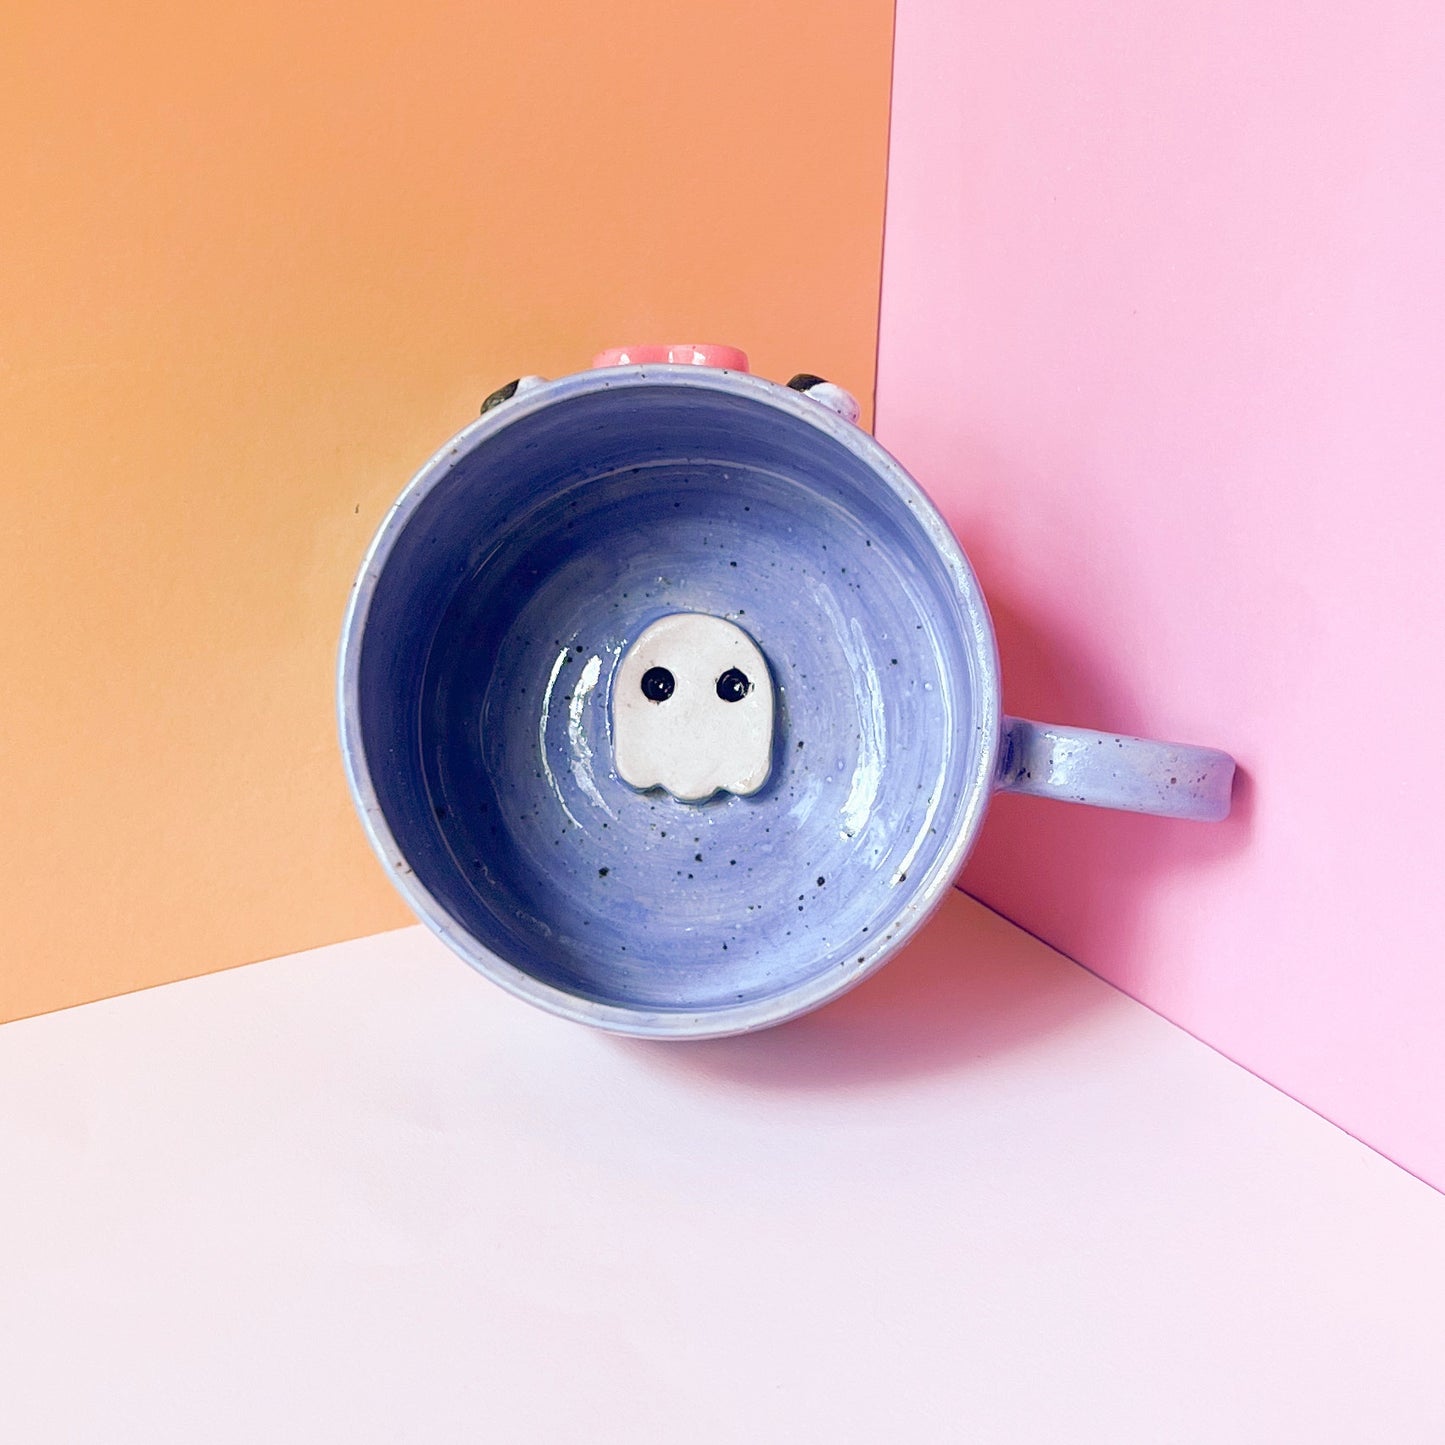 Blue sparkle ghost mug